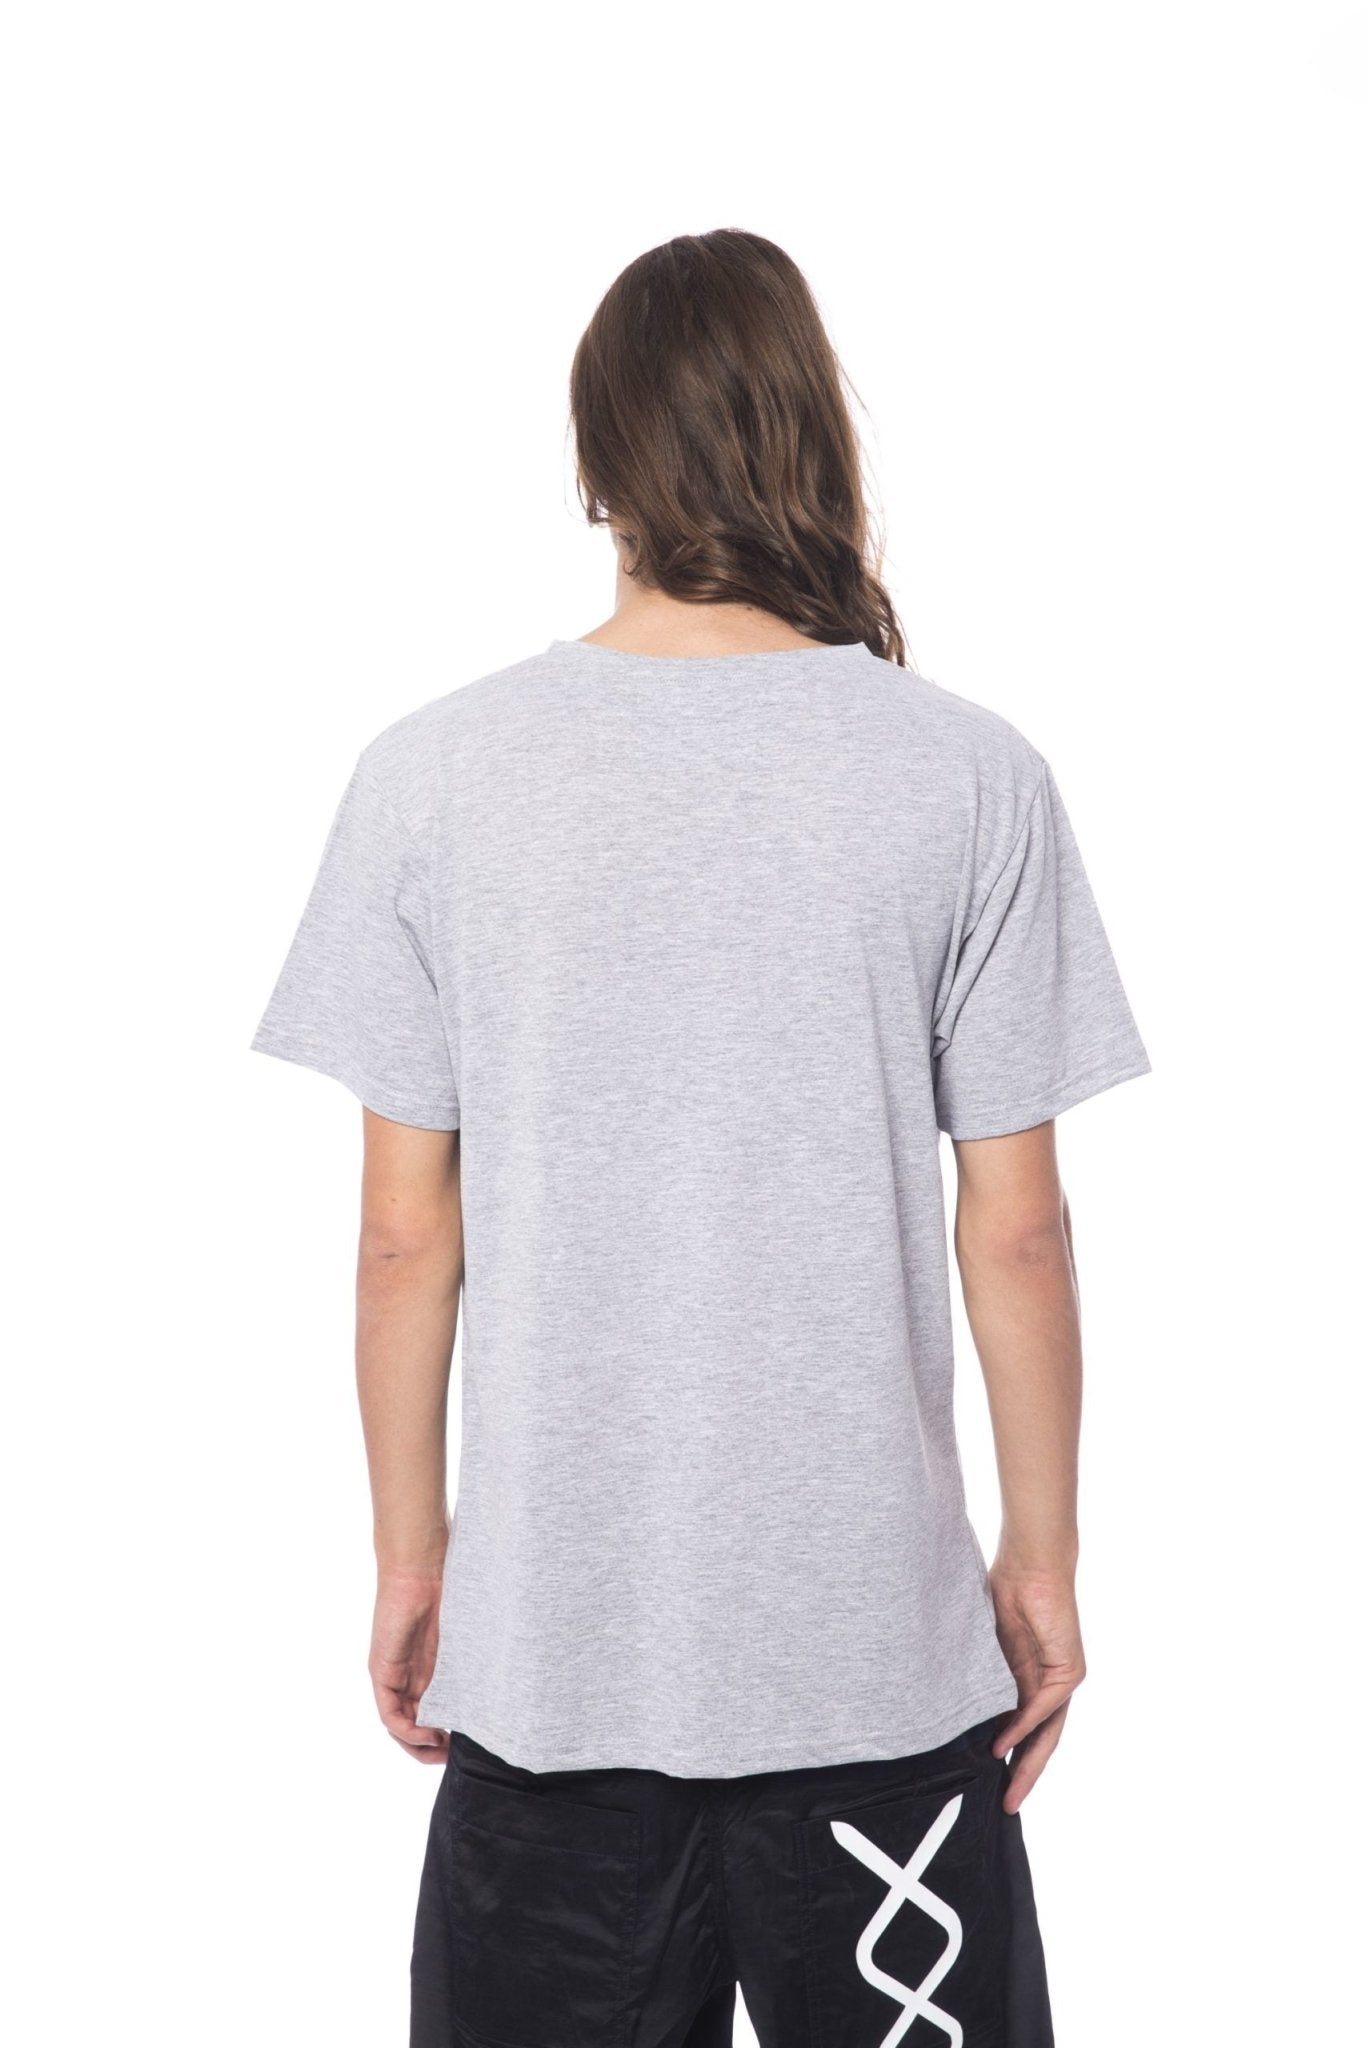 Nicolo Tonetto Gray Cotton T-Shirt - Fizigo